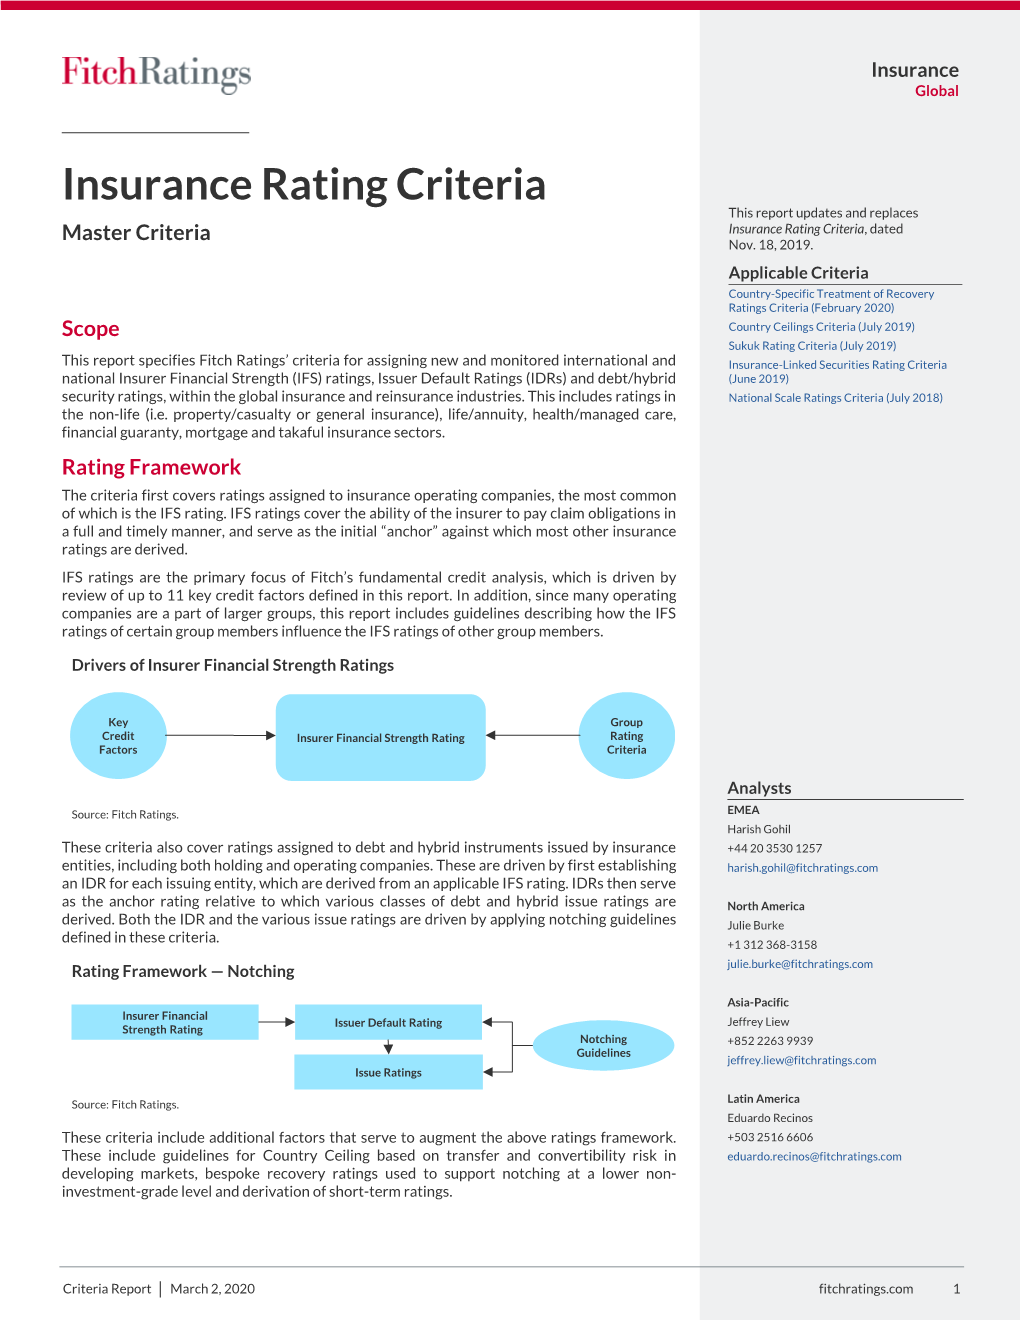 Insurance Rating Criteria This Report Updates and Replaces Master Criteria Insurance Rating Criteria, Dated Nov